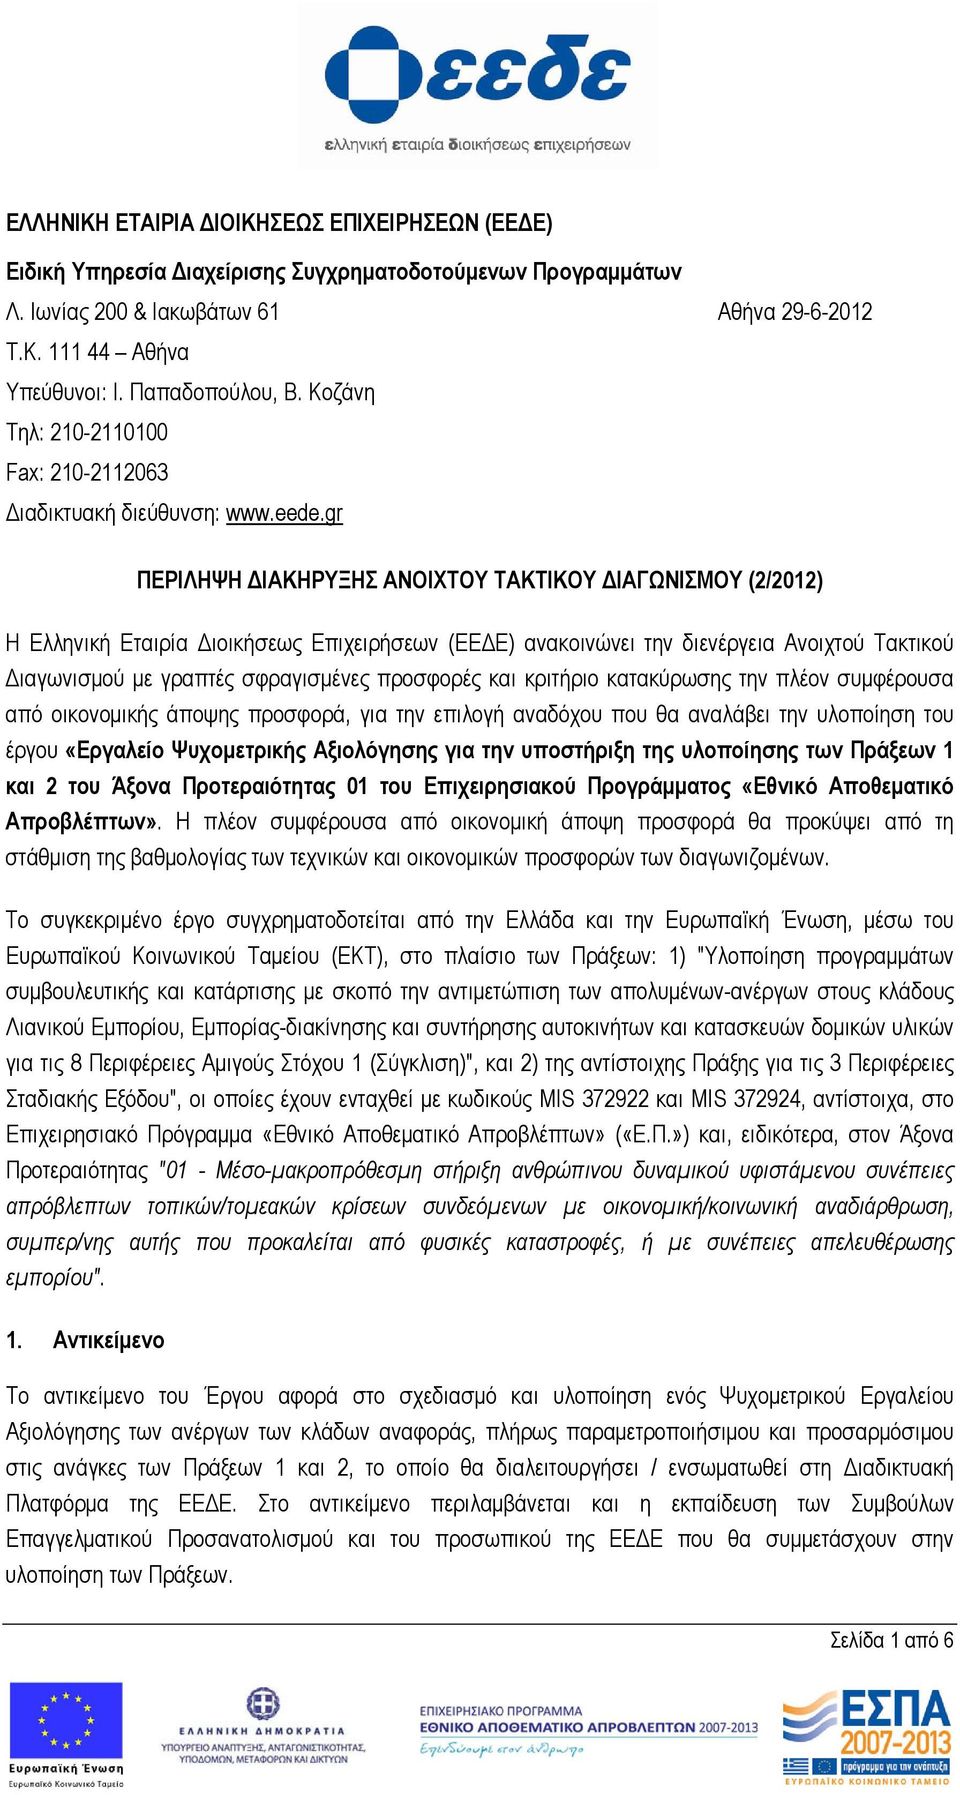 gr ΠEPIΛHΨH ΔIAKHPYΞHΣ ΑΝΟΙΧΤΟΥ ΤΑΚΤΙΚΟΥ ΔIAΓΩNIΣMOY (2/2012) Η Ελληνική Εταιρία Διοικήσεως Επιχειρήσεων (ΕΕΔΕ) ανακοινώνει την διενέργεια Ανοιχτού Τακτικού Διαγωνισμού με γραπτές σφραγισμένες